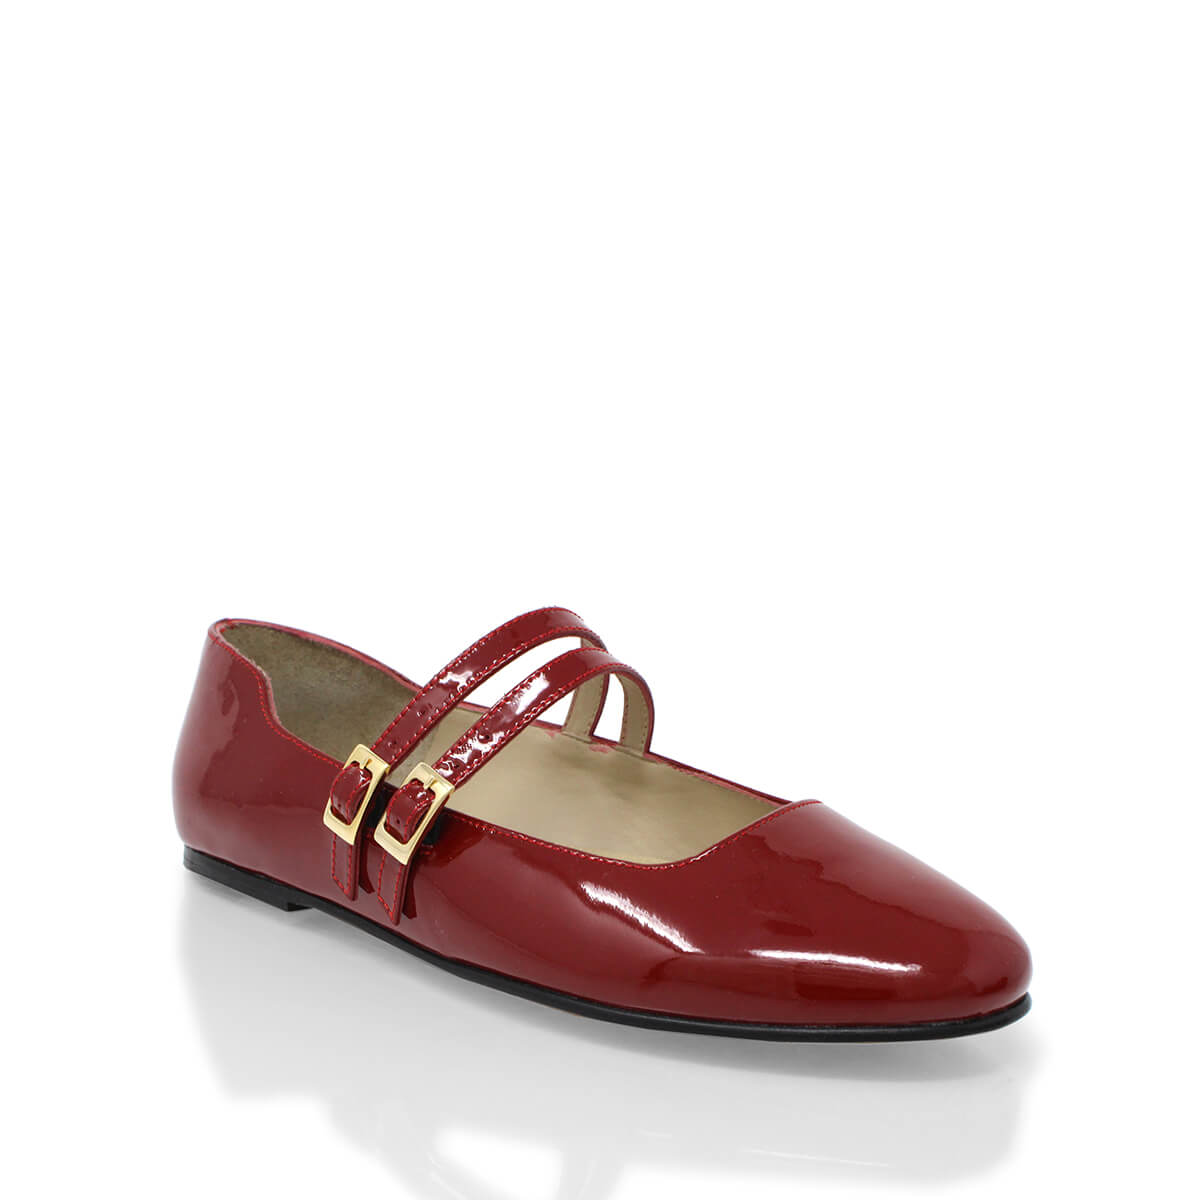 VIOLET - Patent Cherry Regina Romero Flat Ballerina Shoe for Women in Leather